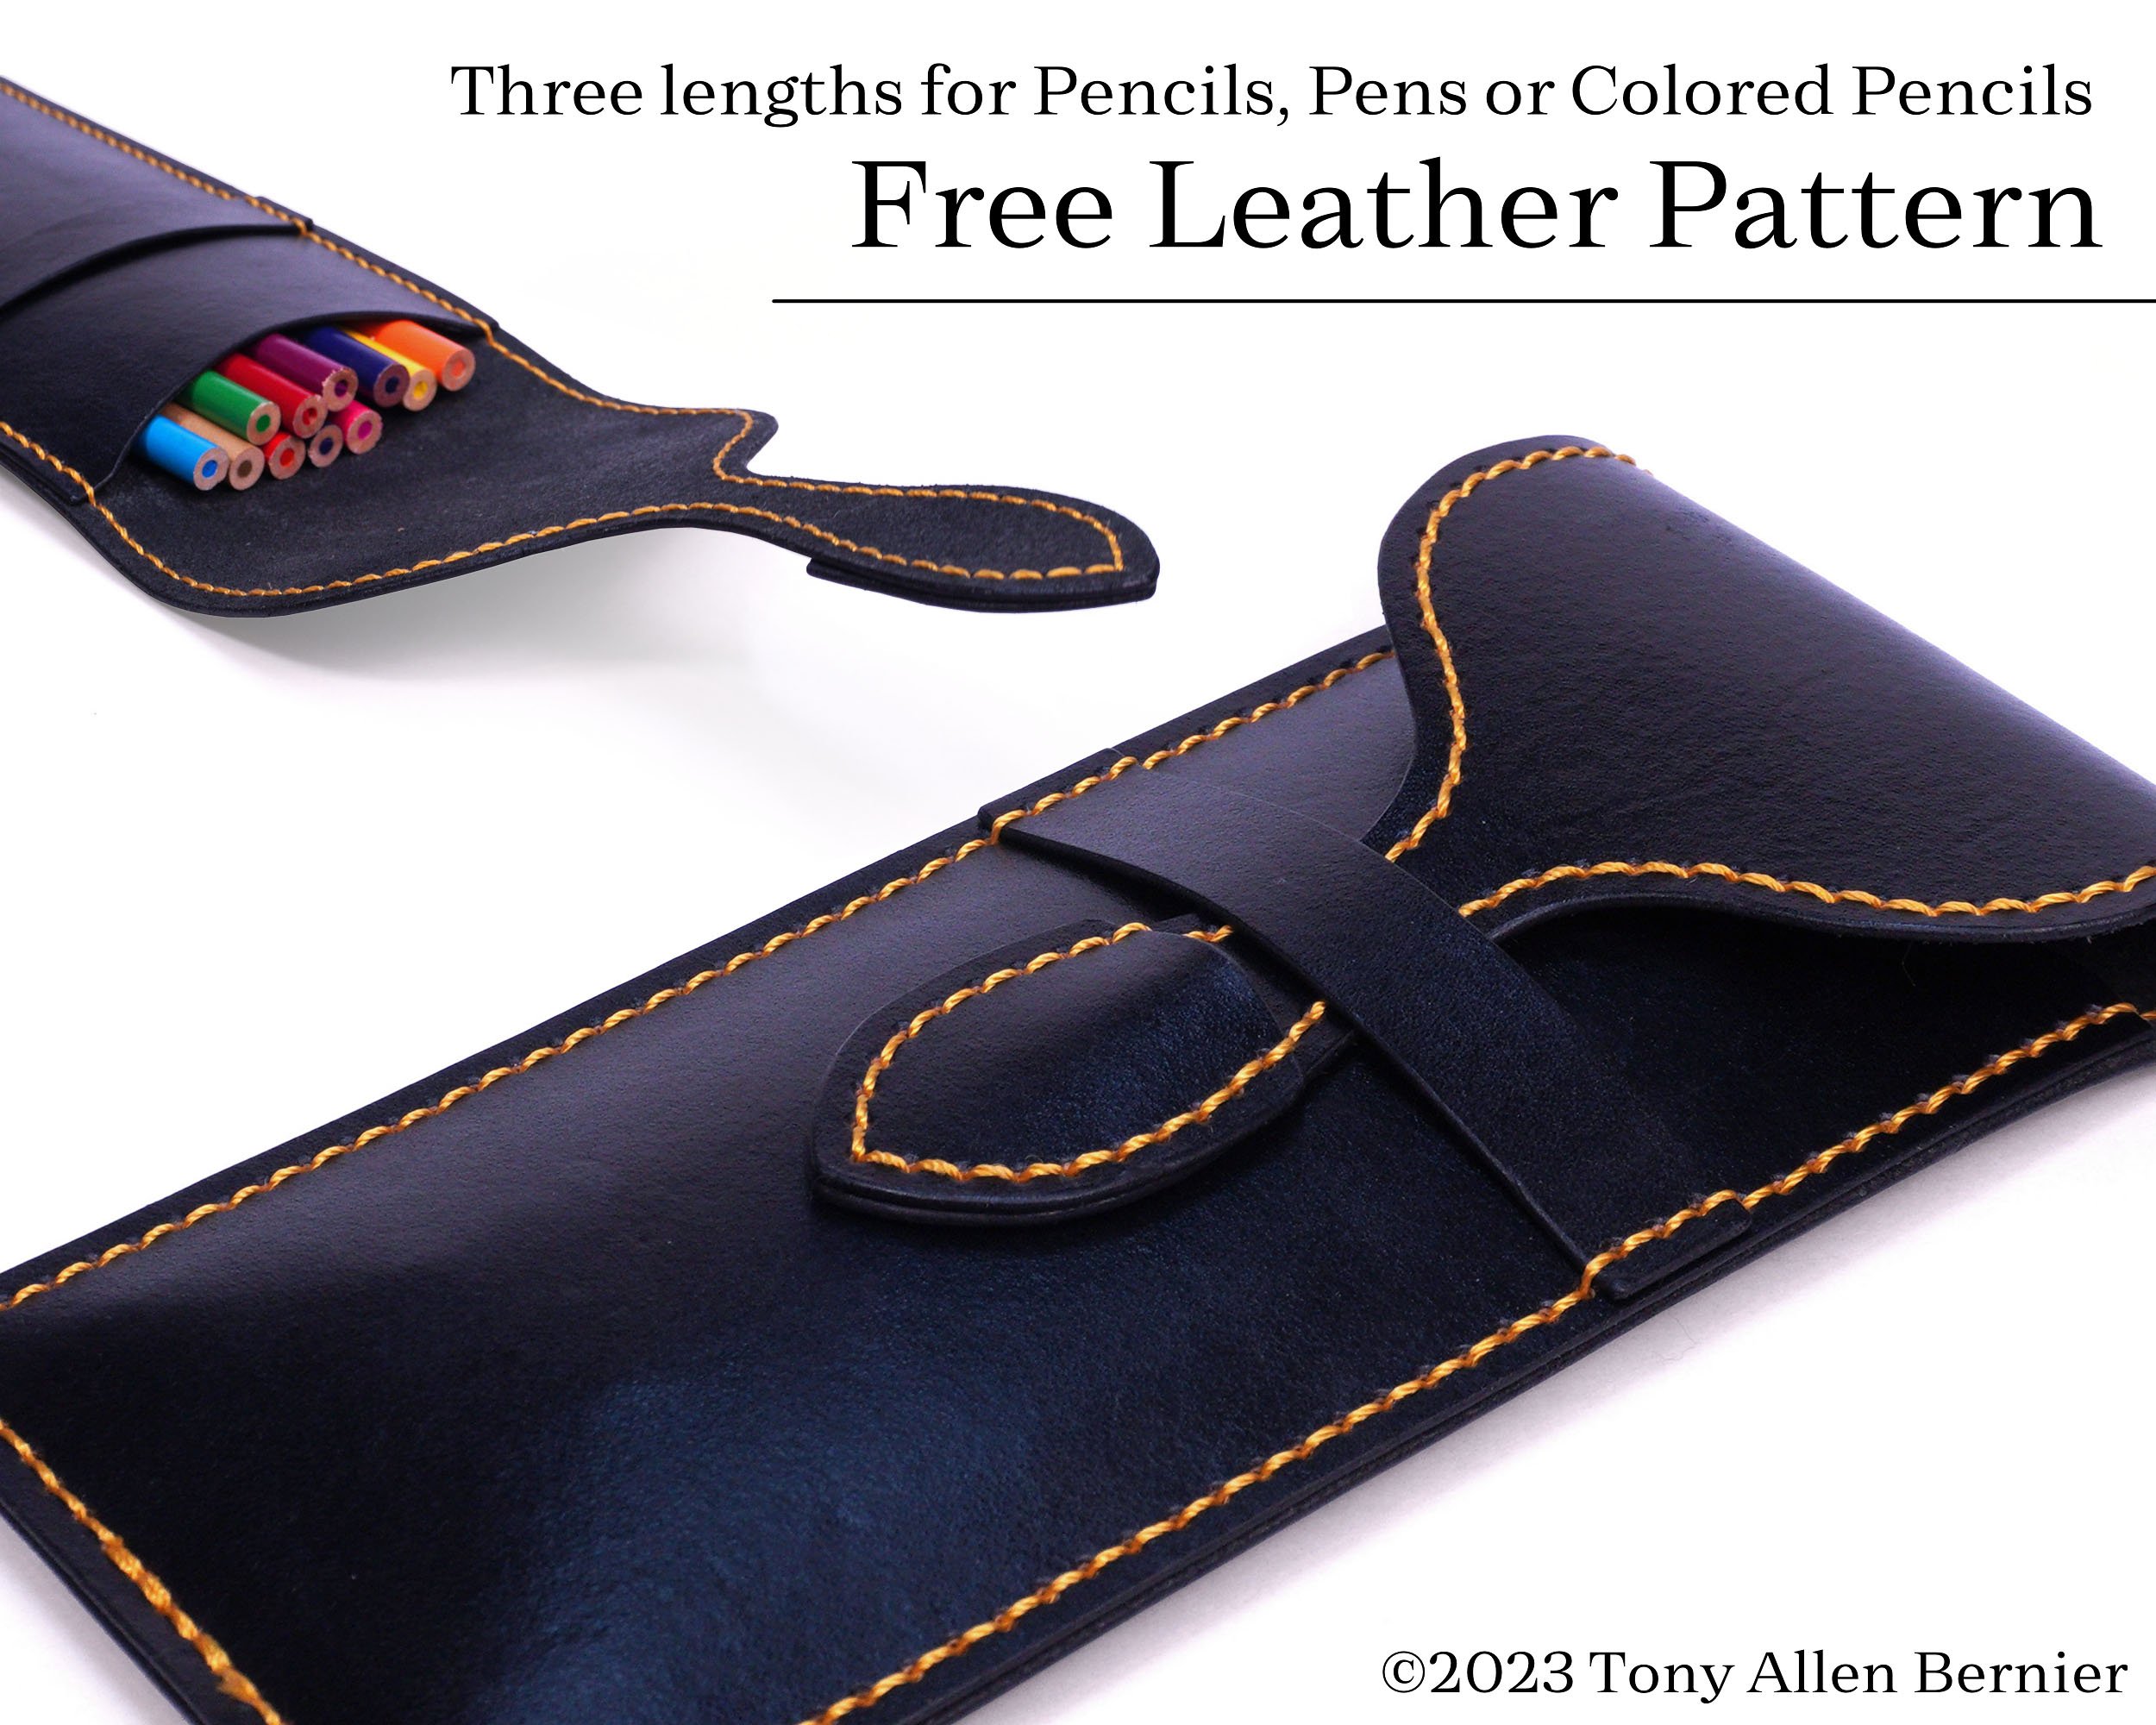 Free leather pencil and pen case patterns — Tony Allen Bernier